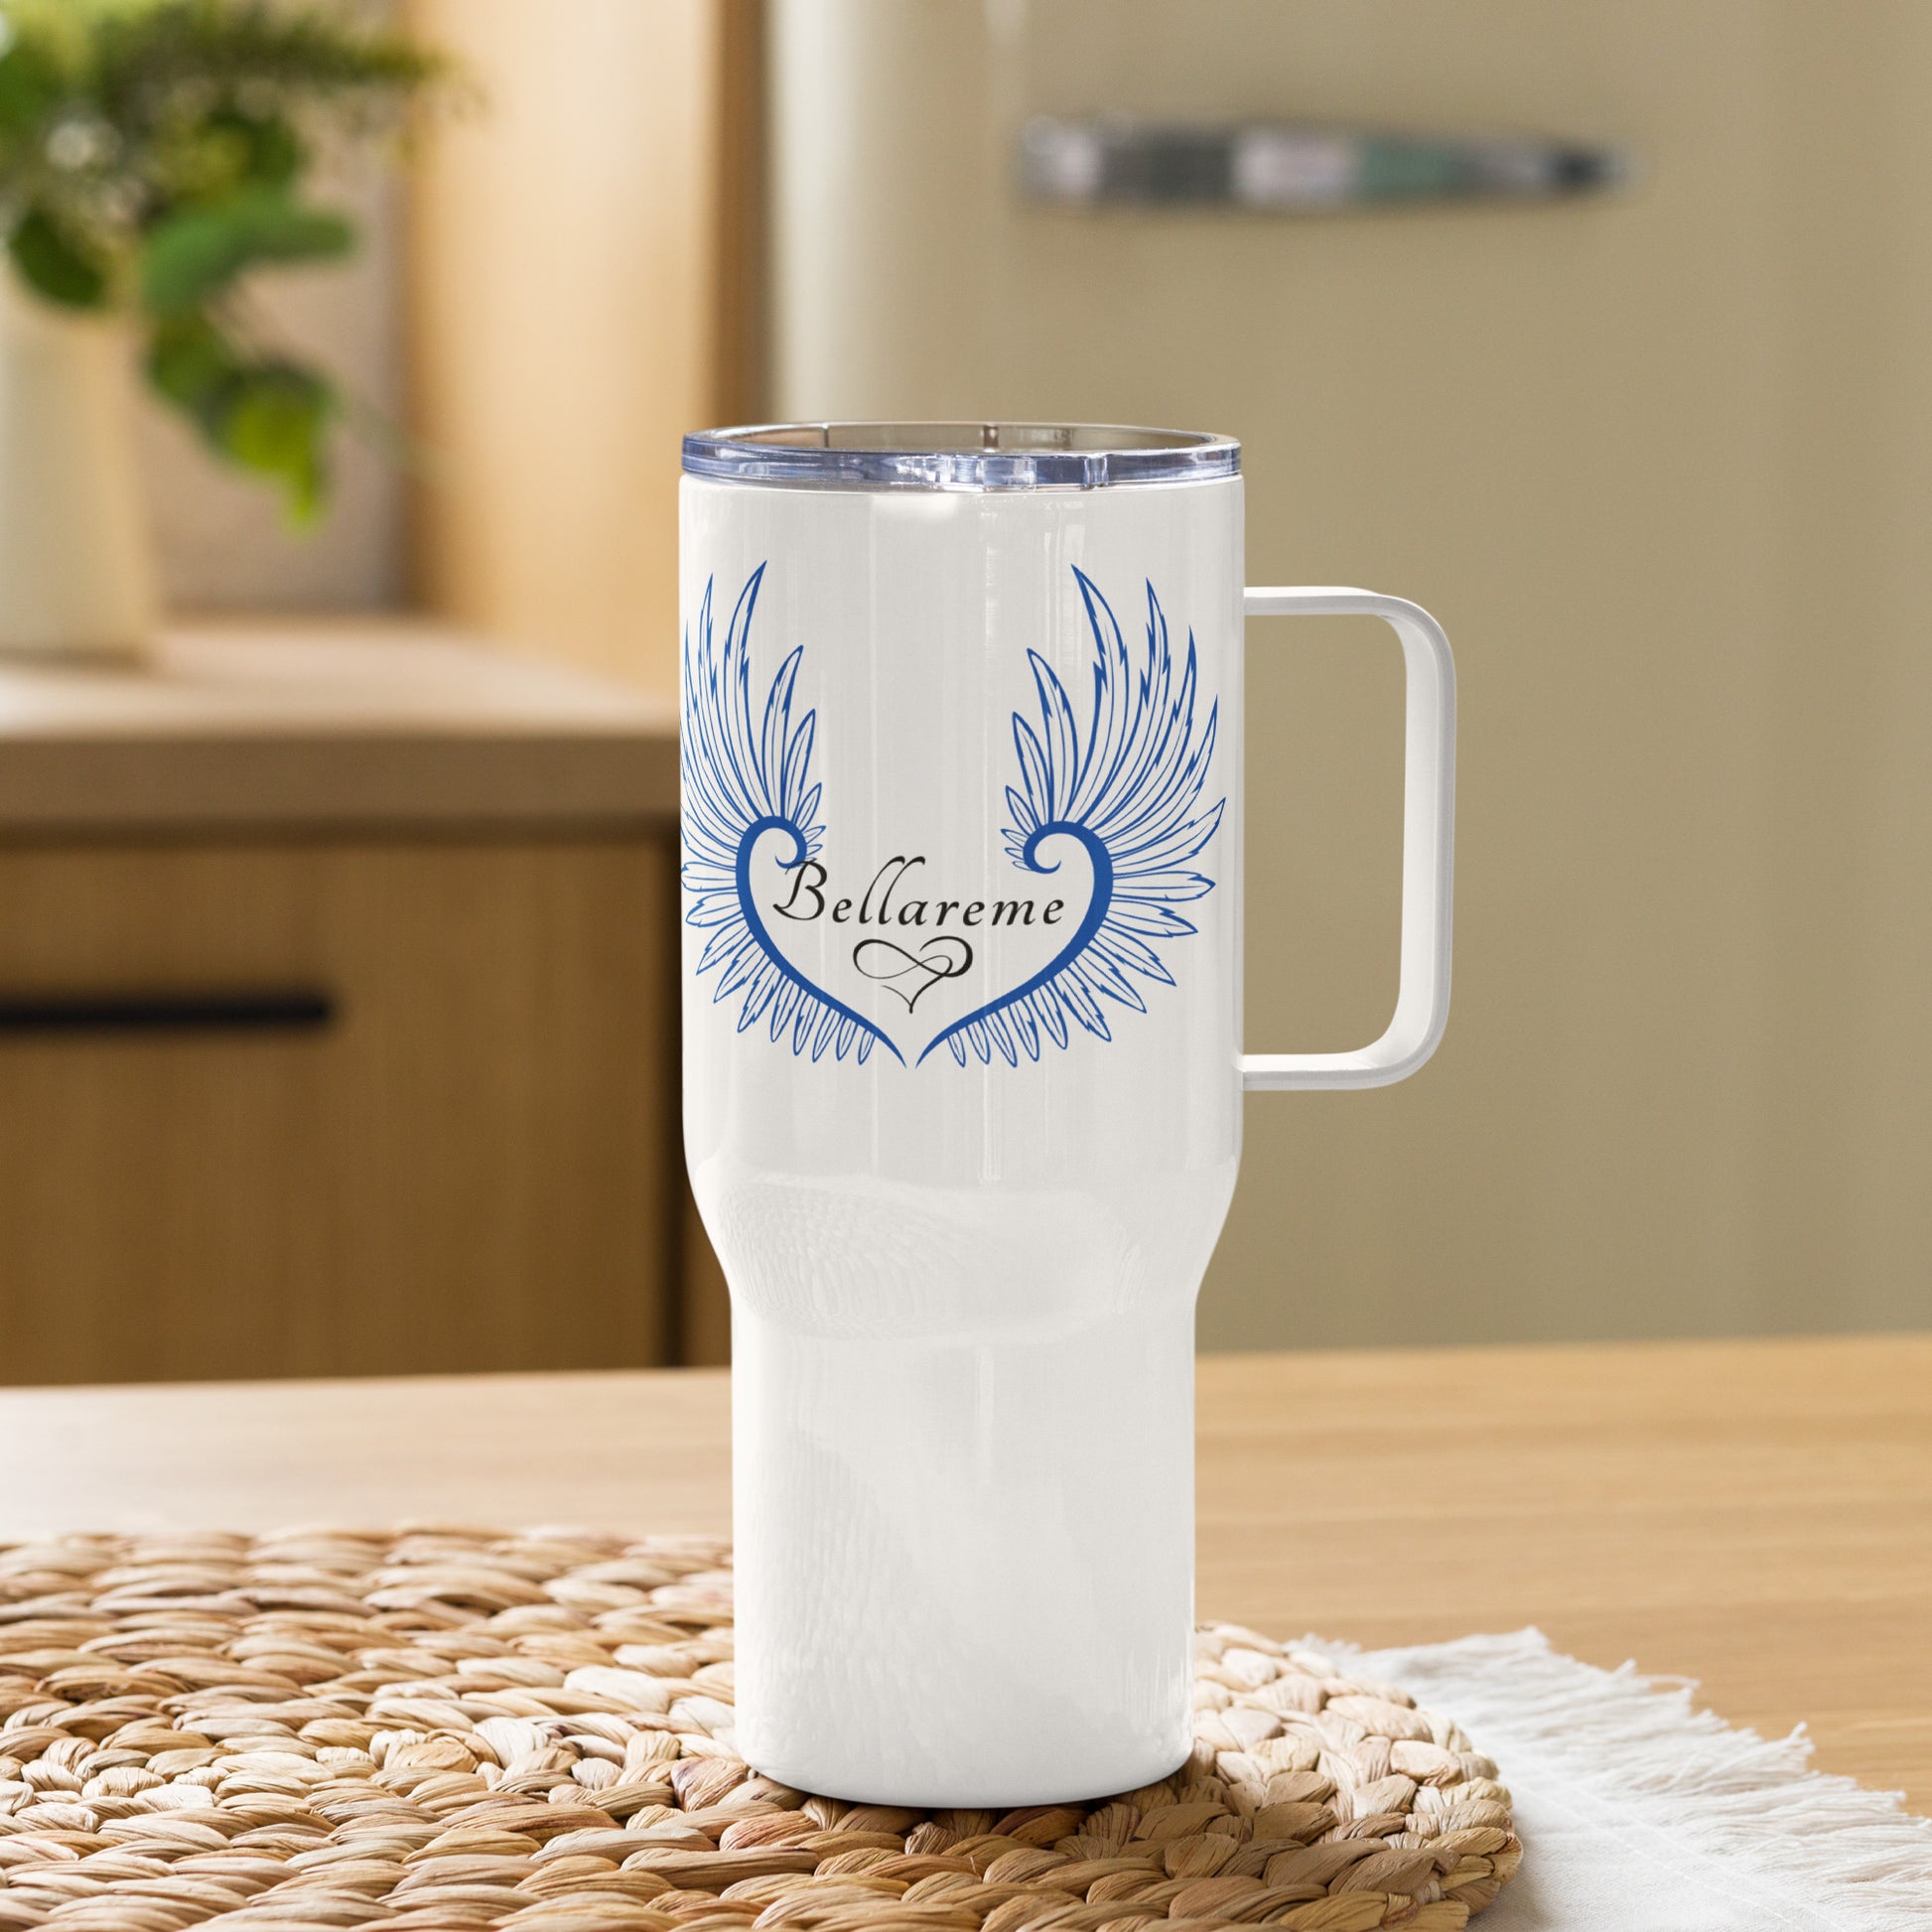 Branded Travel mug with a handle - BELLAREME